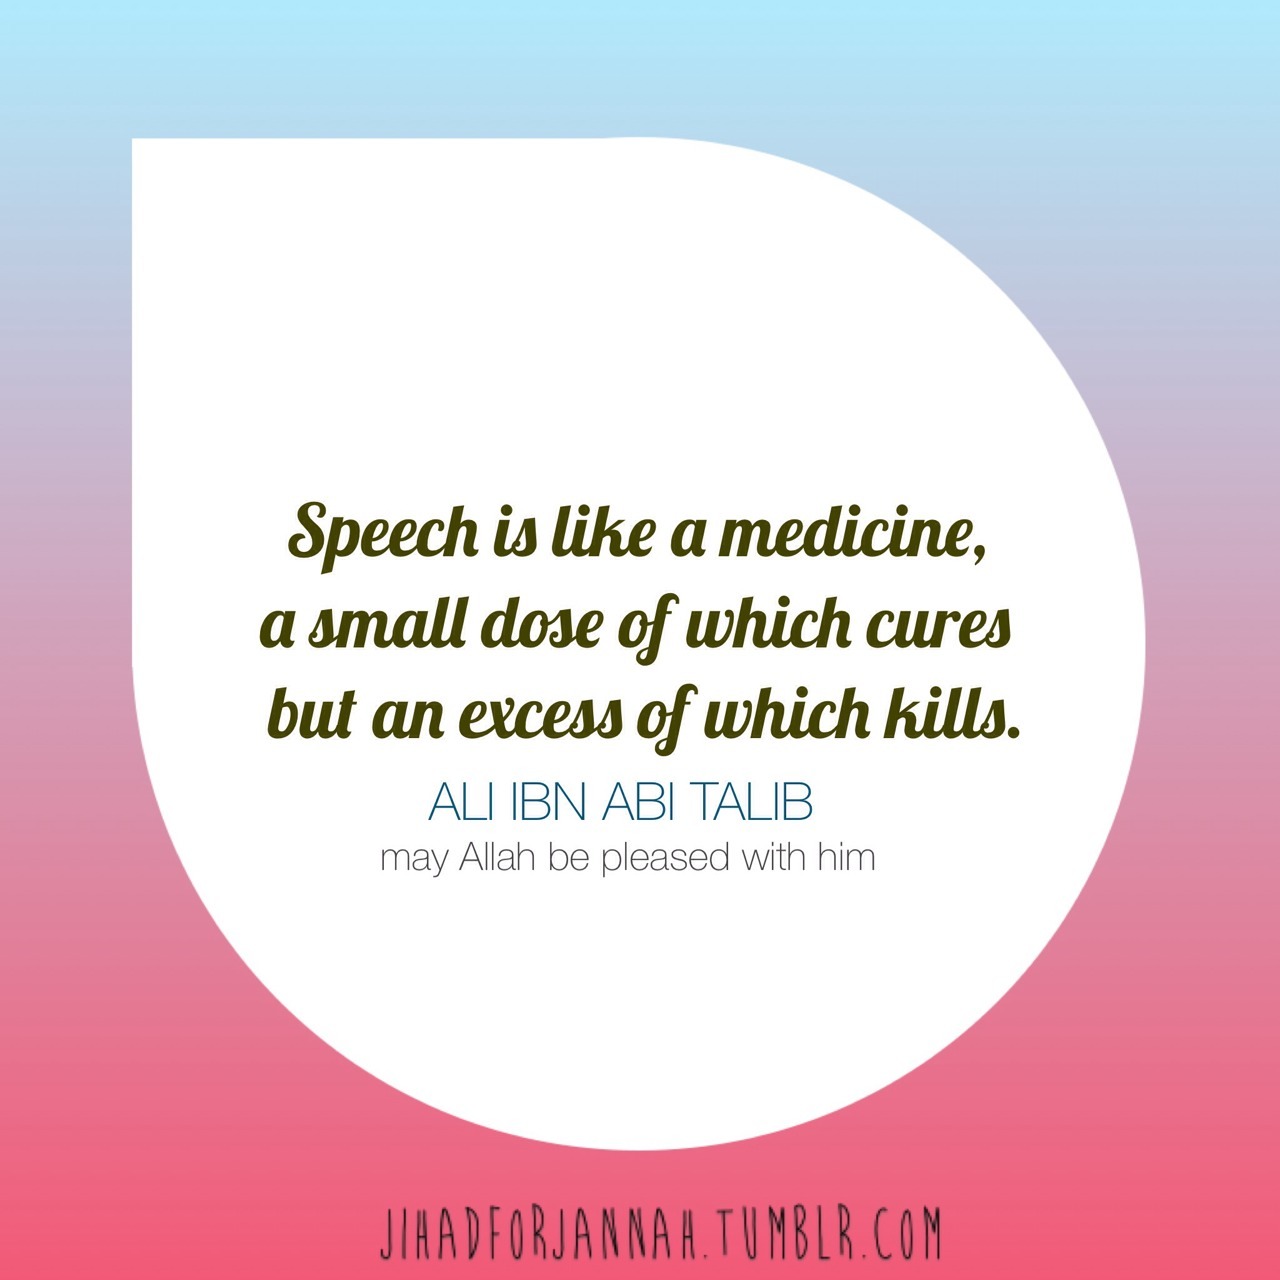 Speech - Inspirational Islamic Quotes